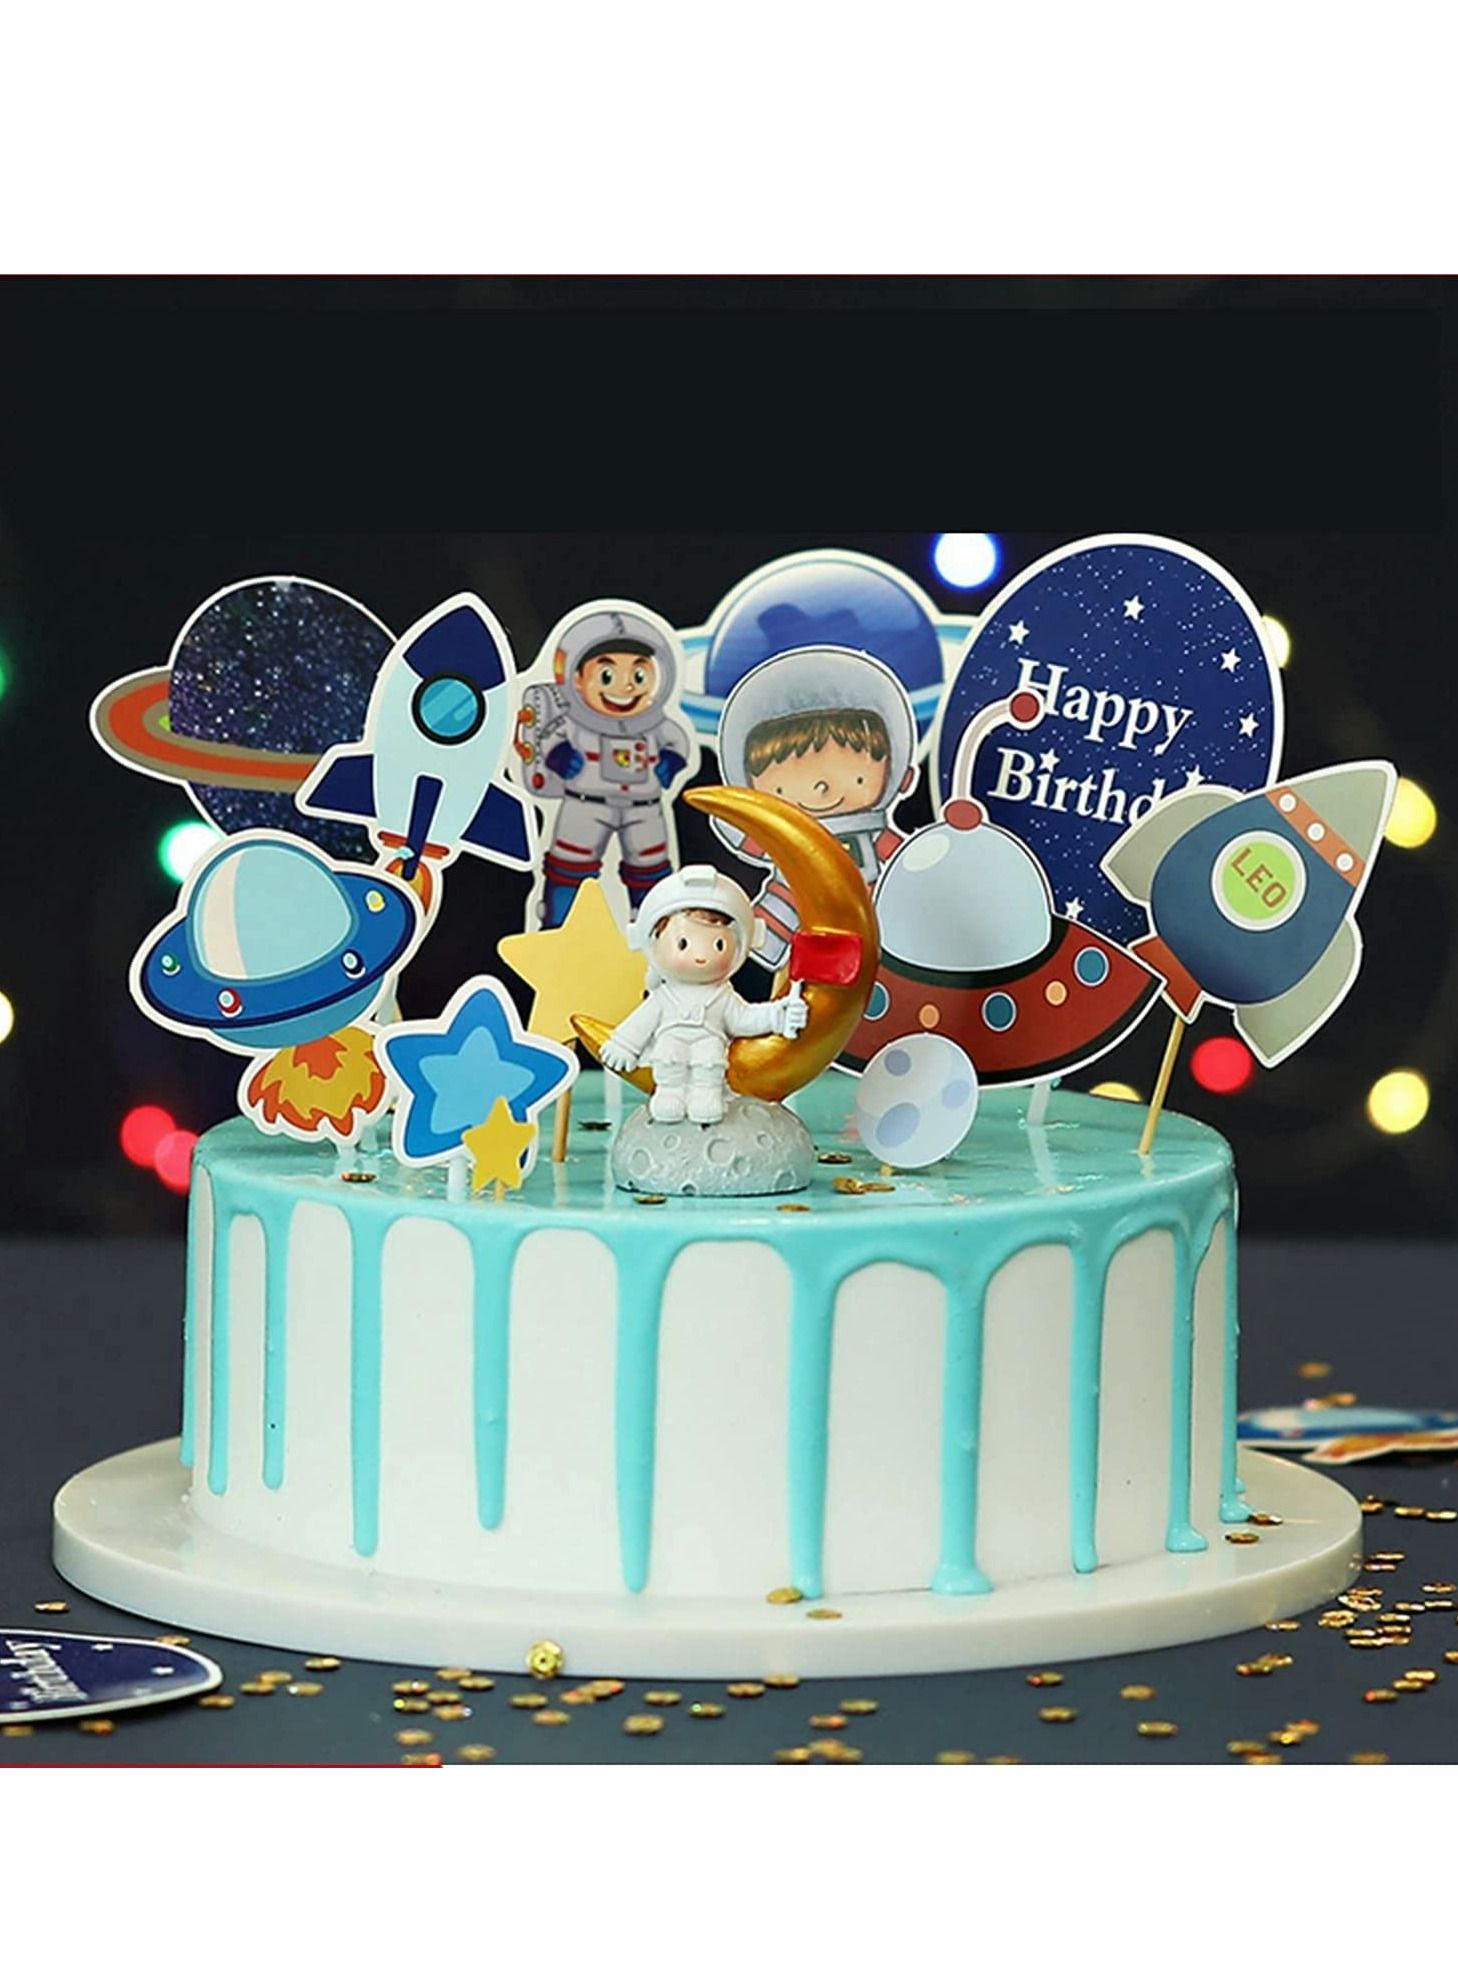 38 Cute Among Us Cake Ideas : Astronaut or Crewmates